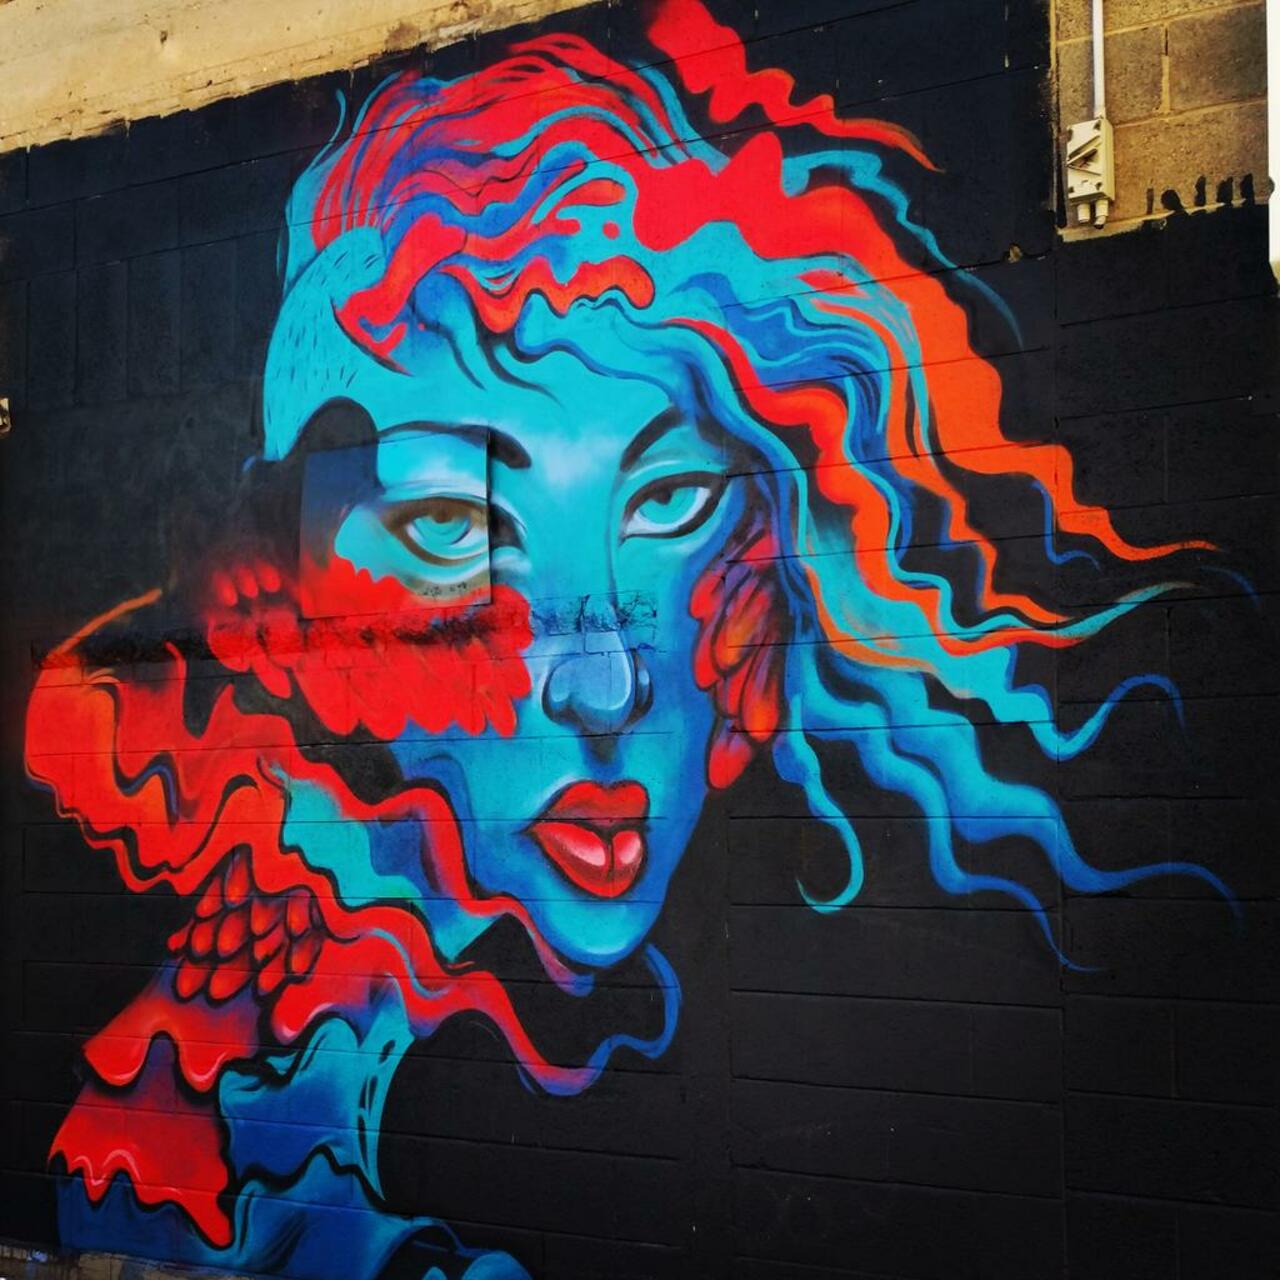 #Sarah_Boese #Adelaide #SouthAustralia #streetart #IAJOT @arthunterofsa @AdelaideMade @rAdelaide5000 #wallart #mural http://t.co/qIJT8ih7m7